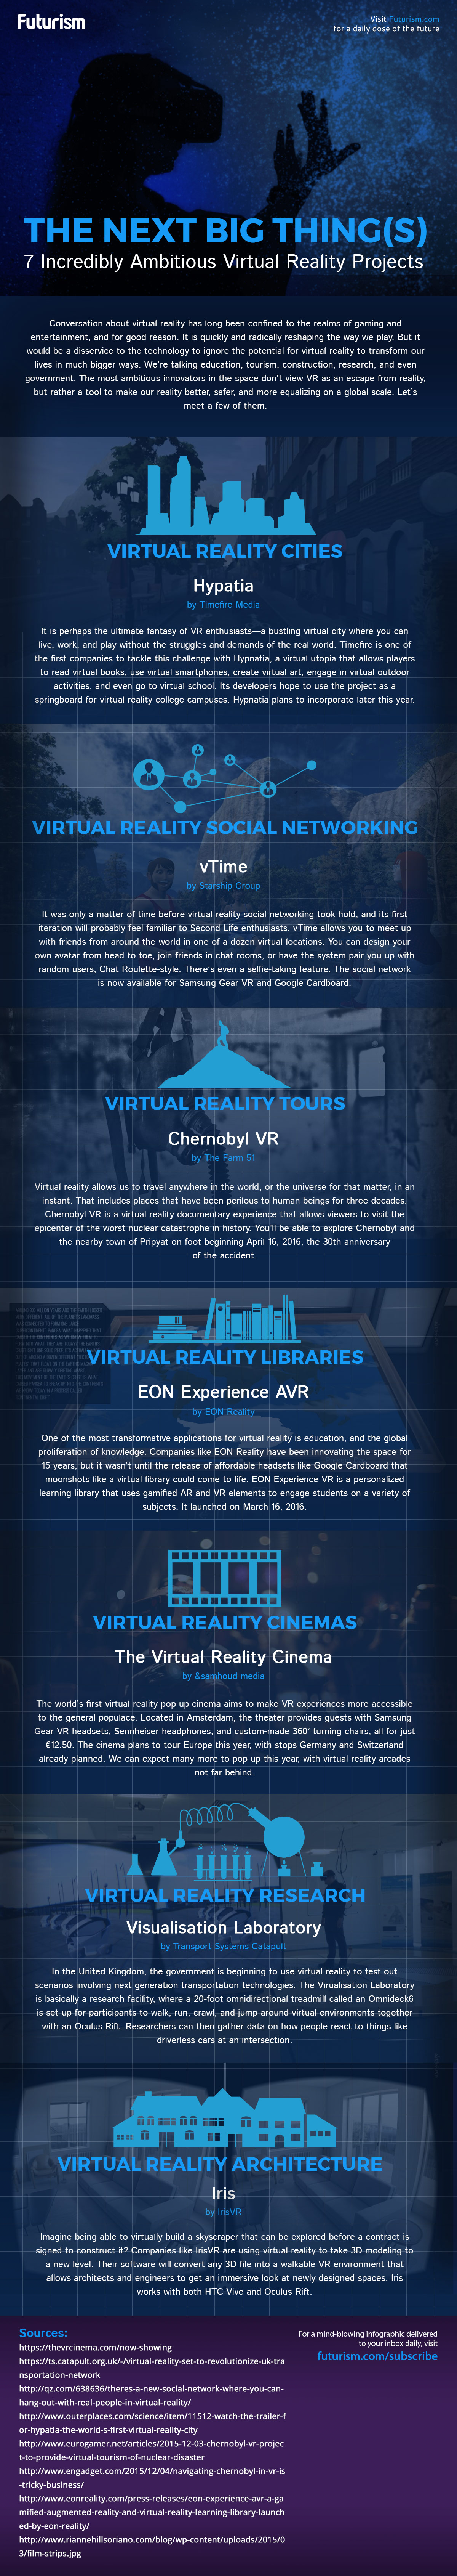 Next Big Thing in Virtual Reality